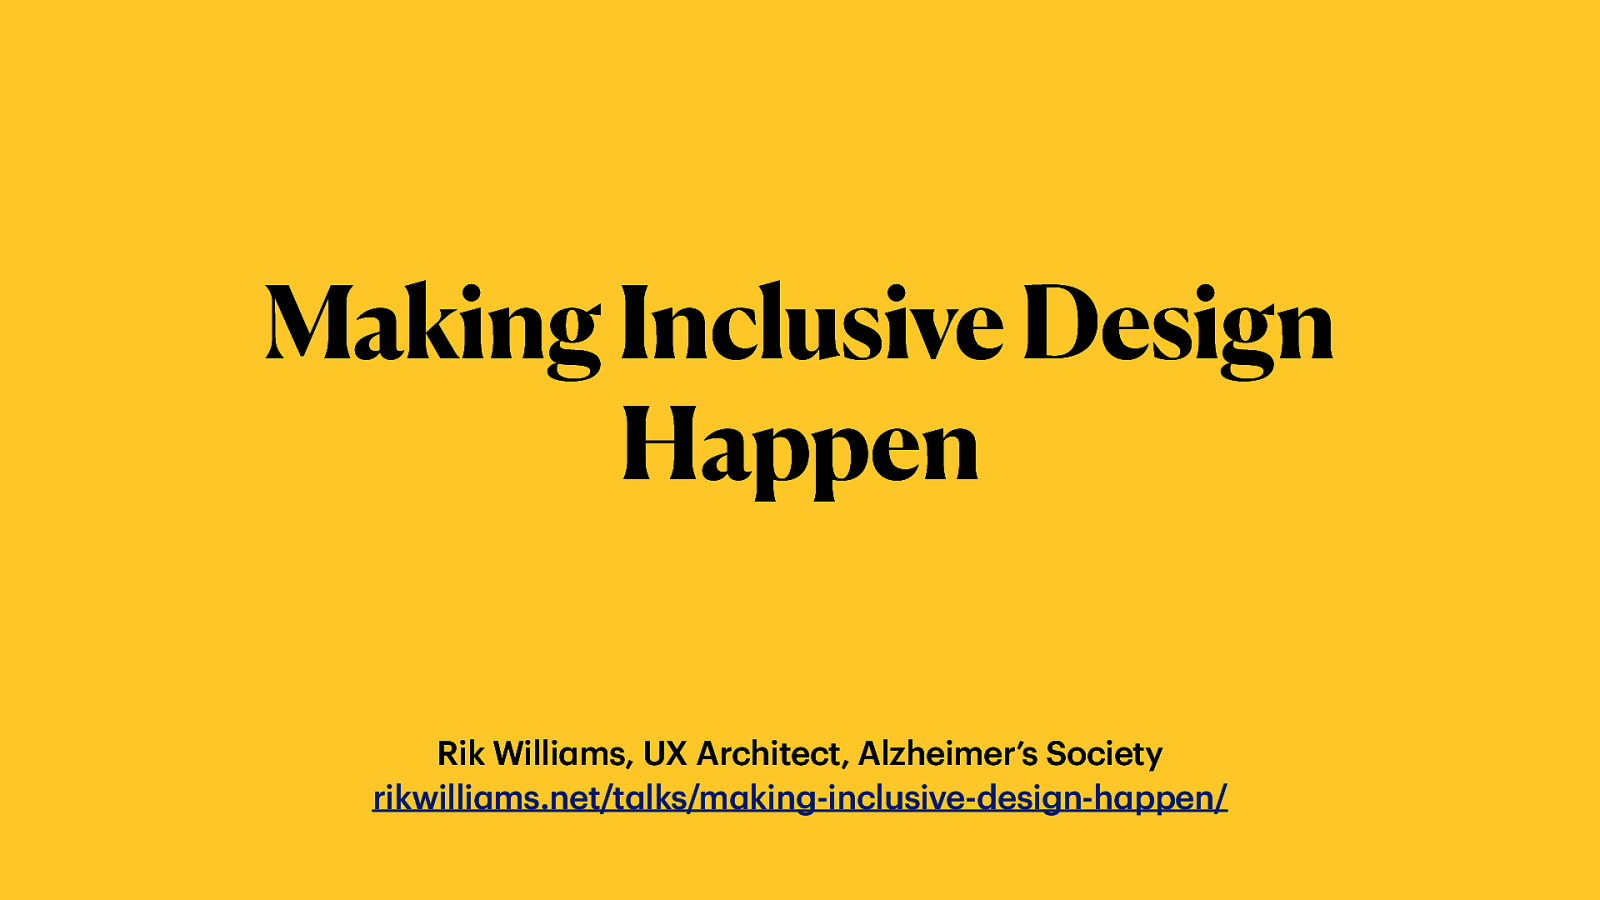 Making inclusive design happen